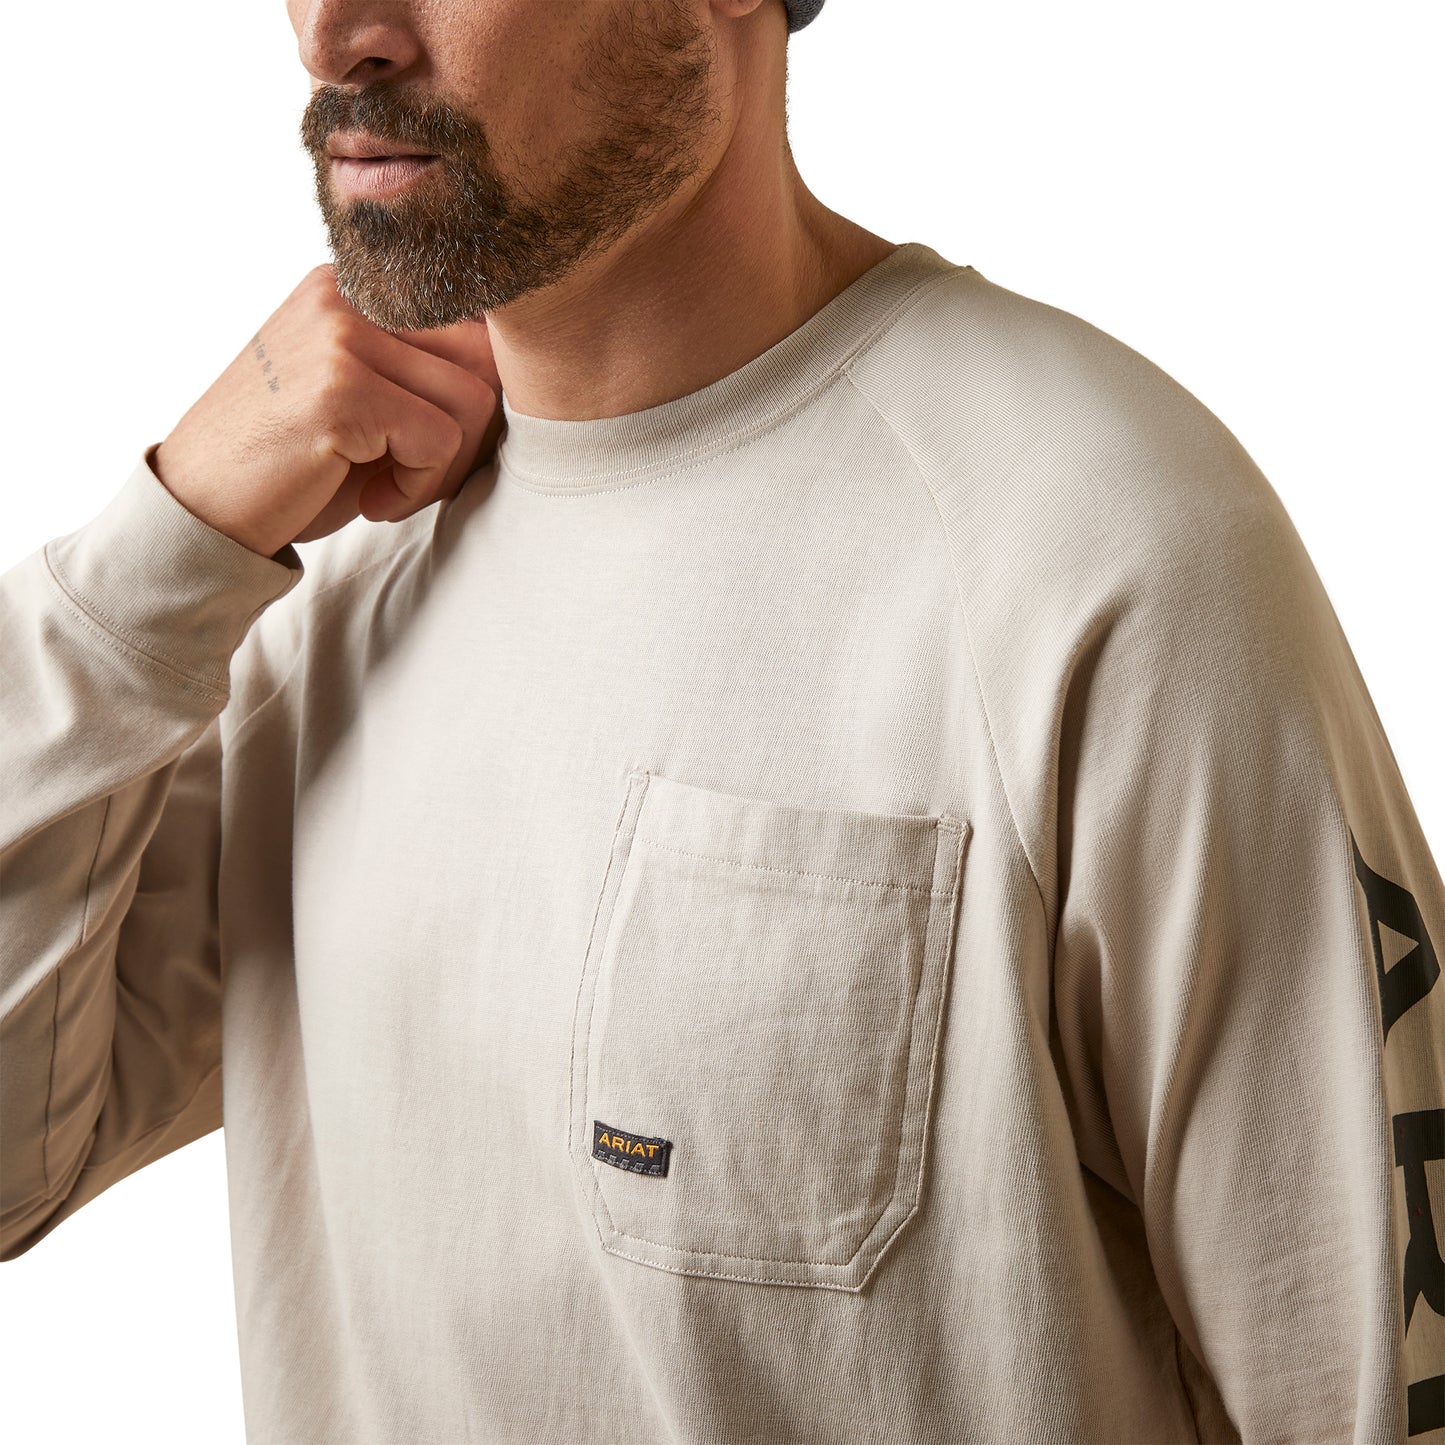 Ariat Men's Rebar Cotton Strong Graphic Khaki T-Shirt 10046787